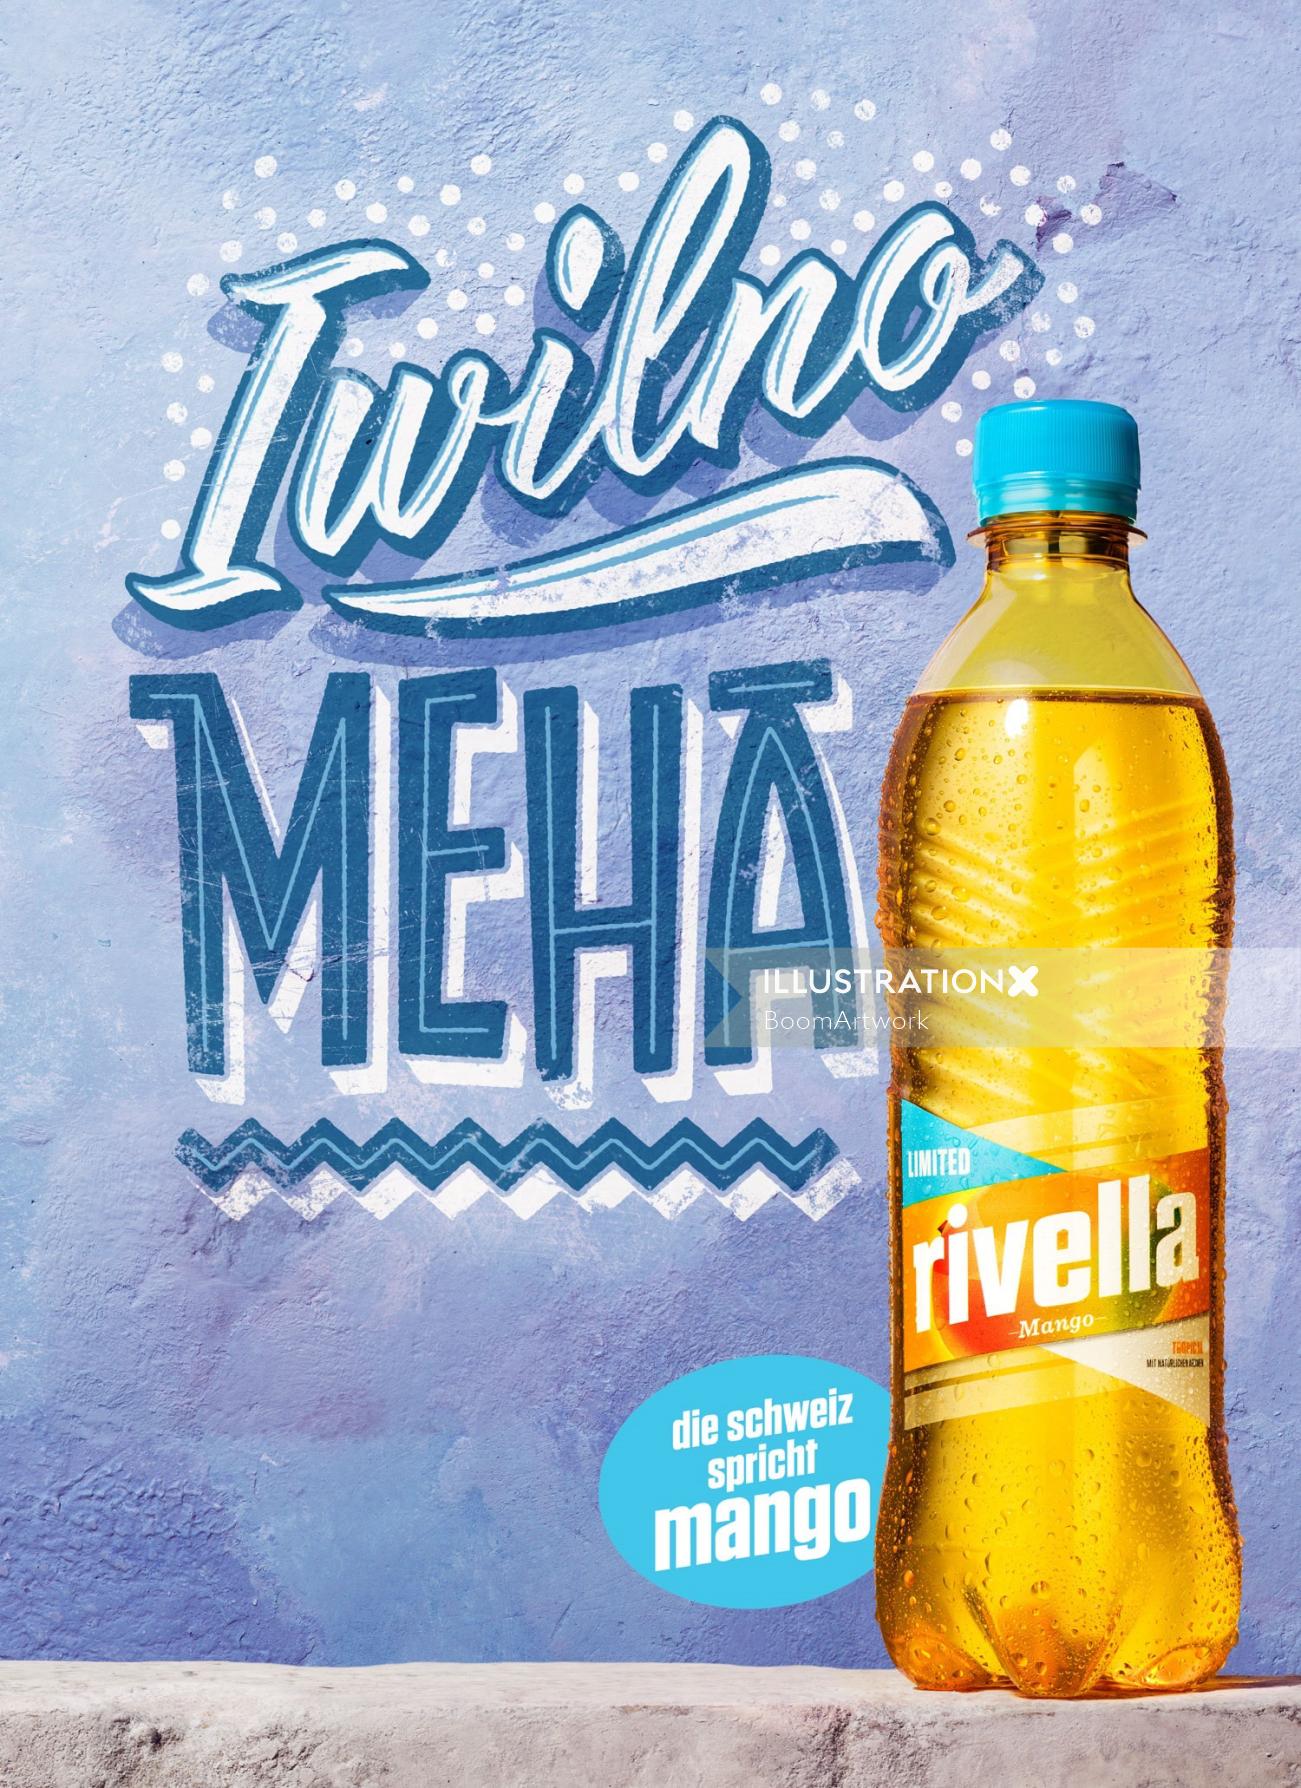 Lettering Illustration Of Rivella Meha Mango